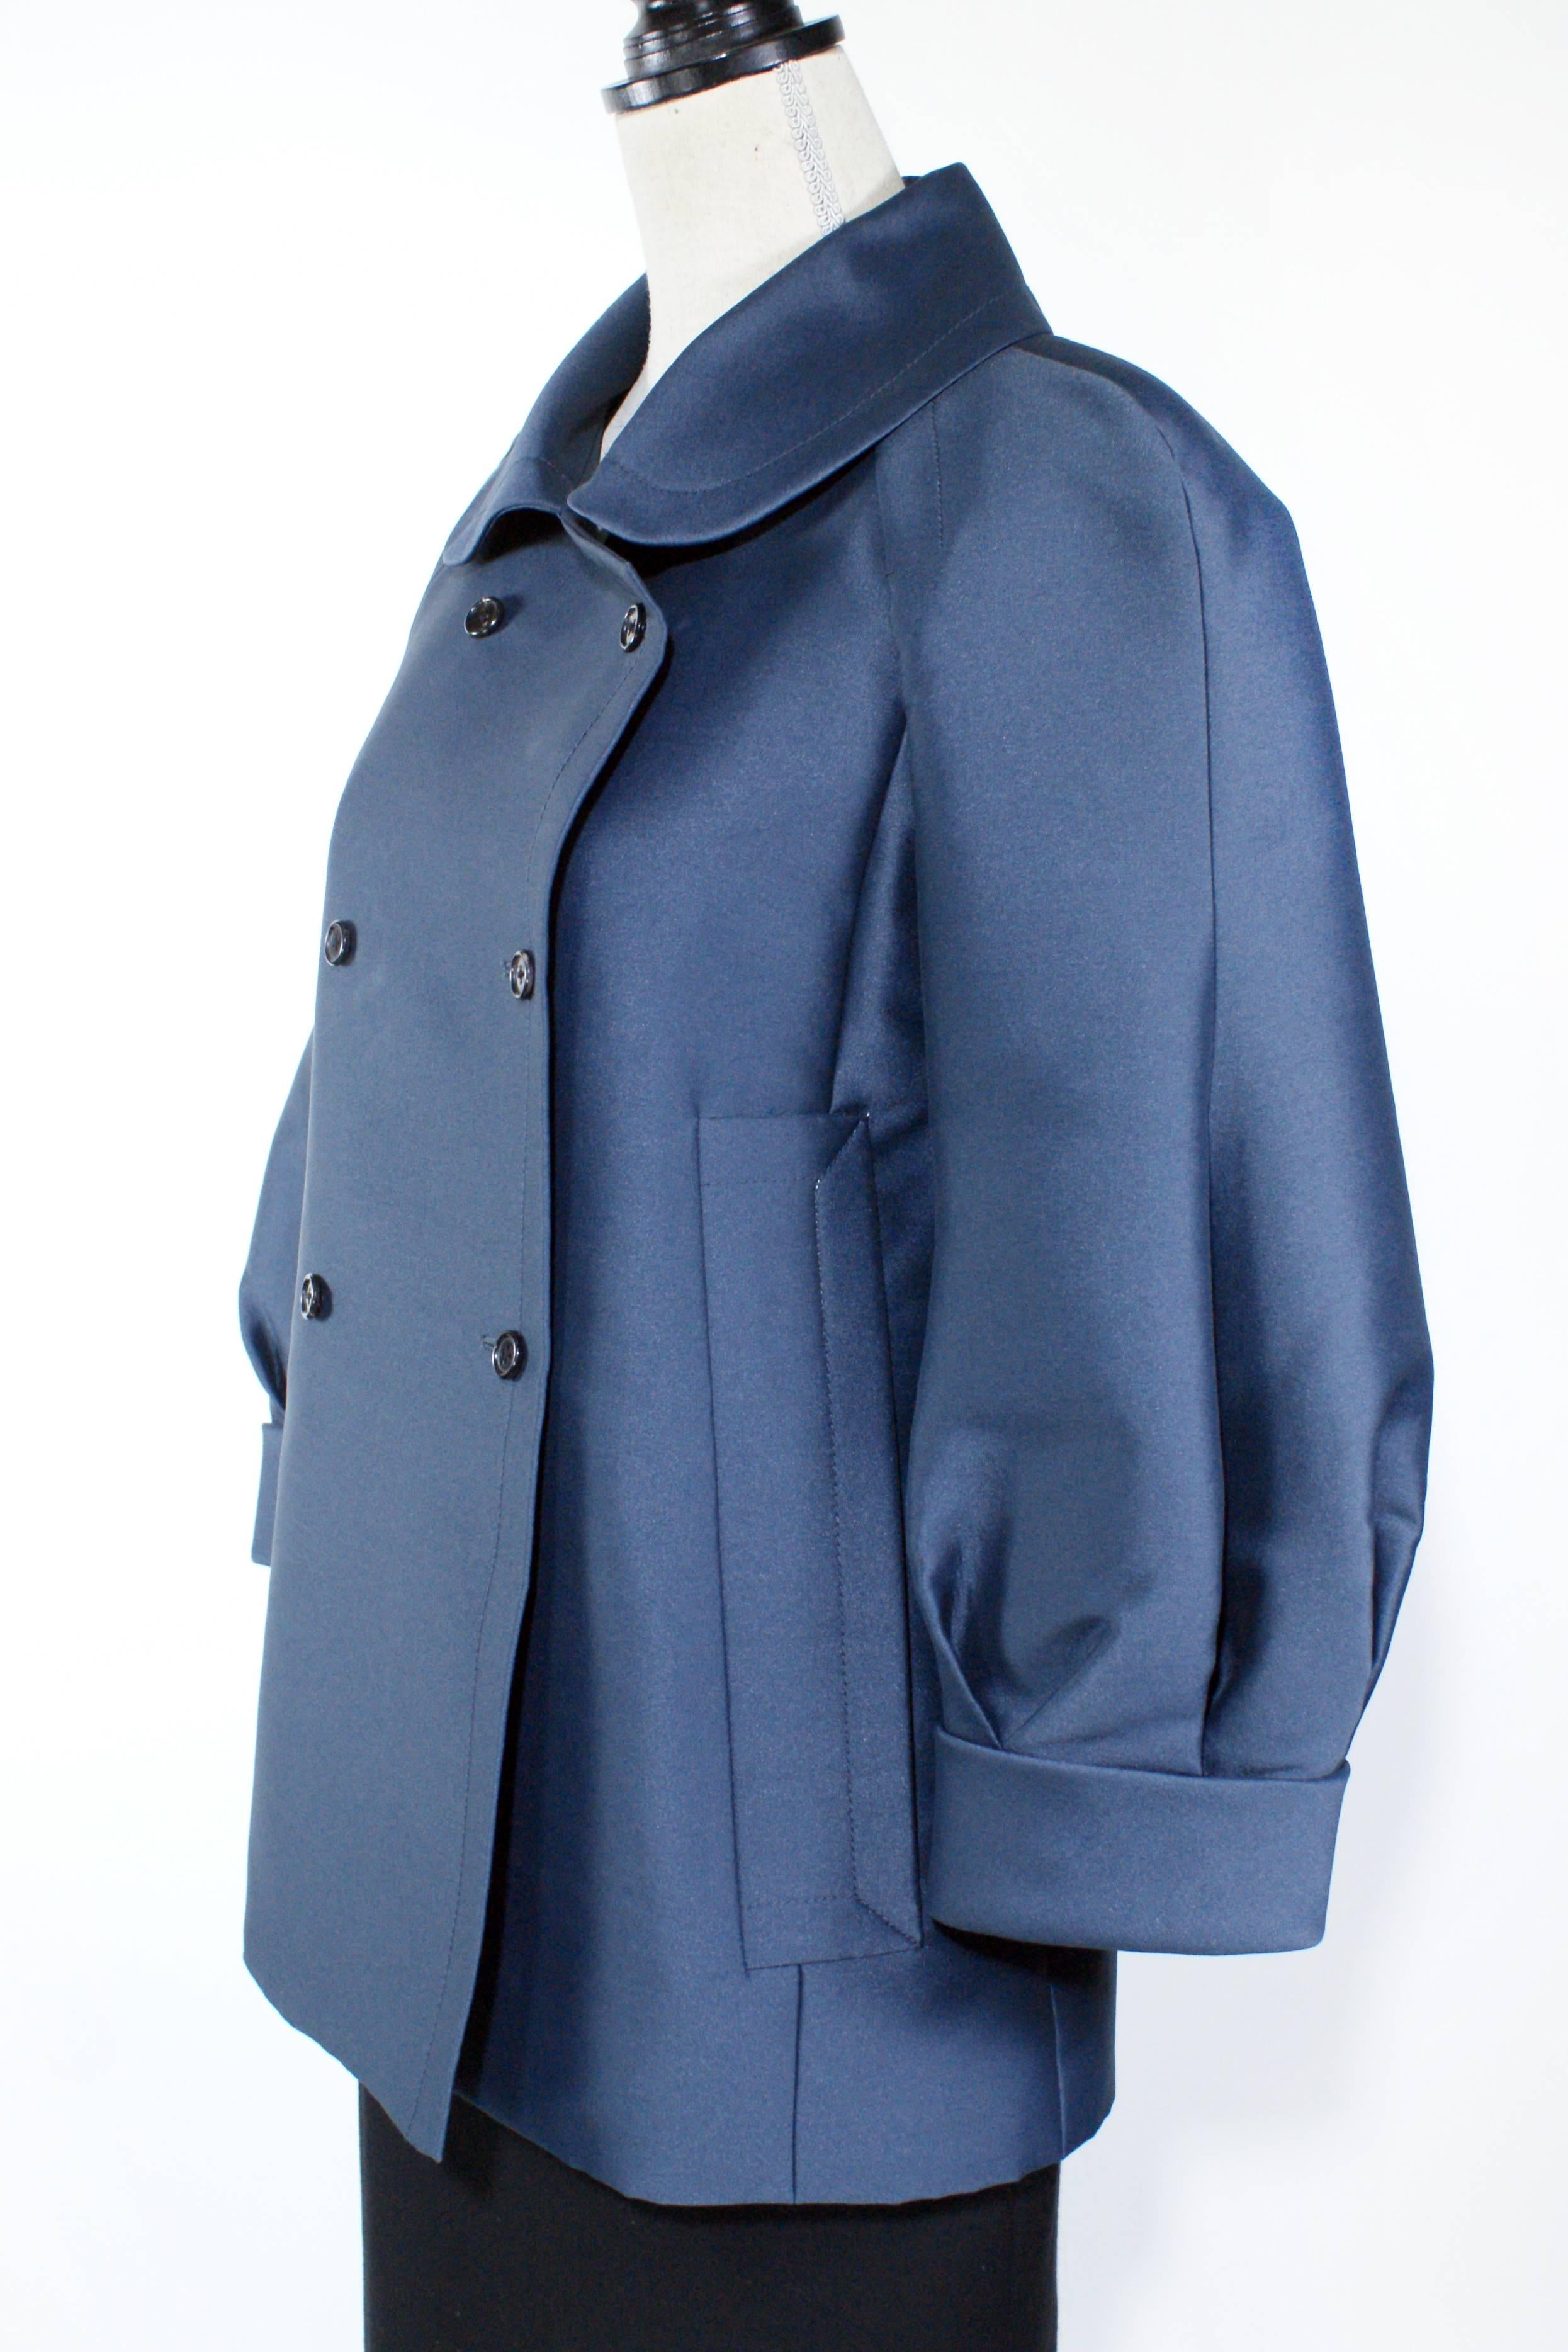 Marc Jacobs Navy Blue Coat 1